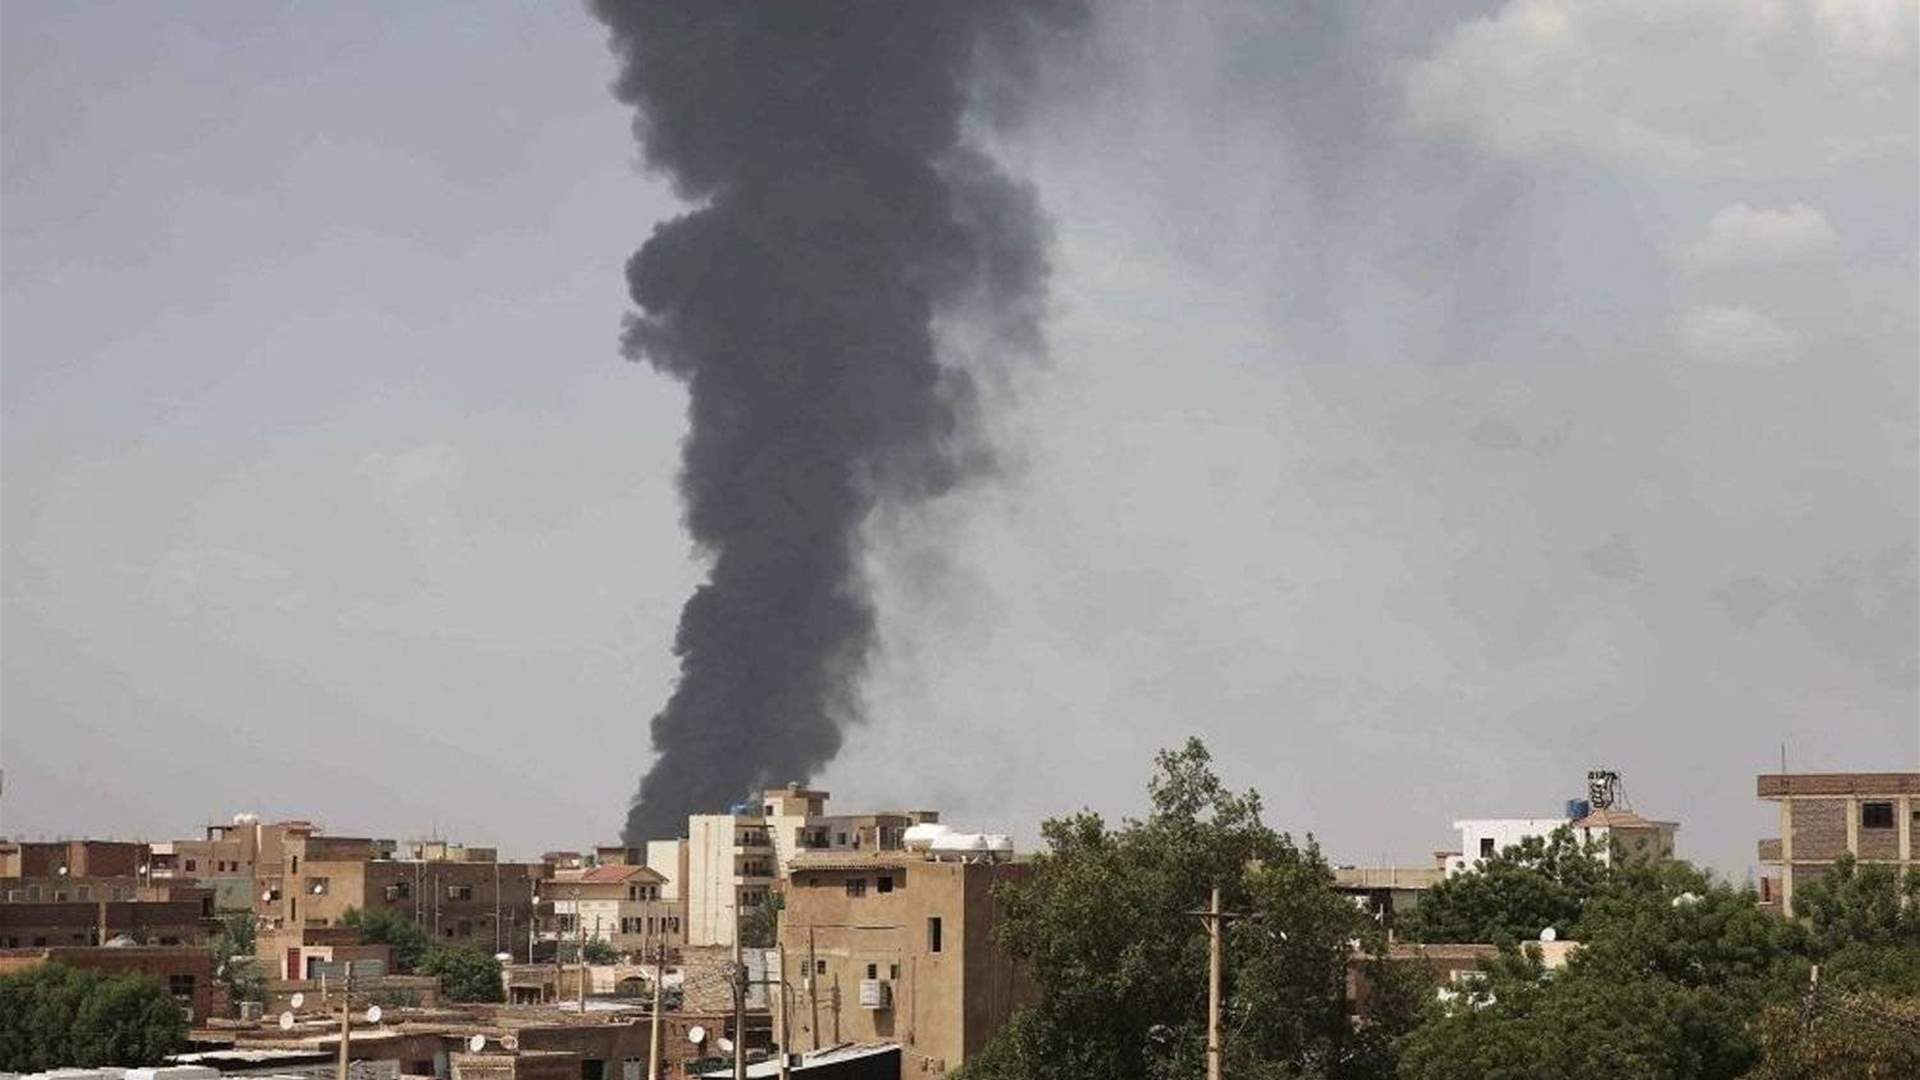 Sudanese activists: Around 40 killed in artillery shelling near Khartoum